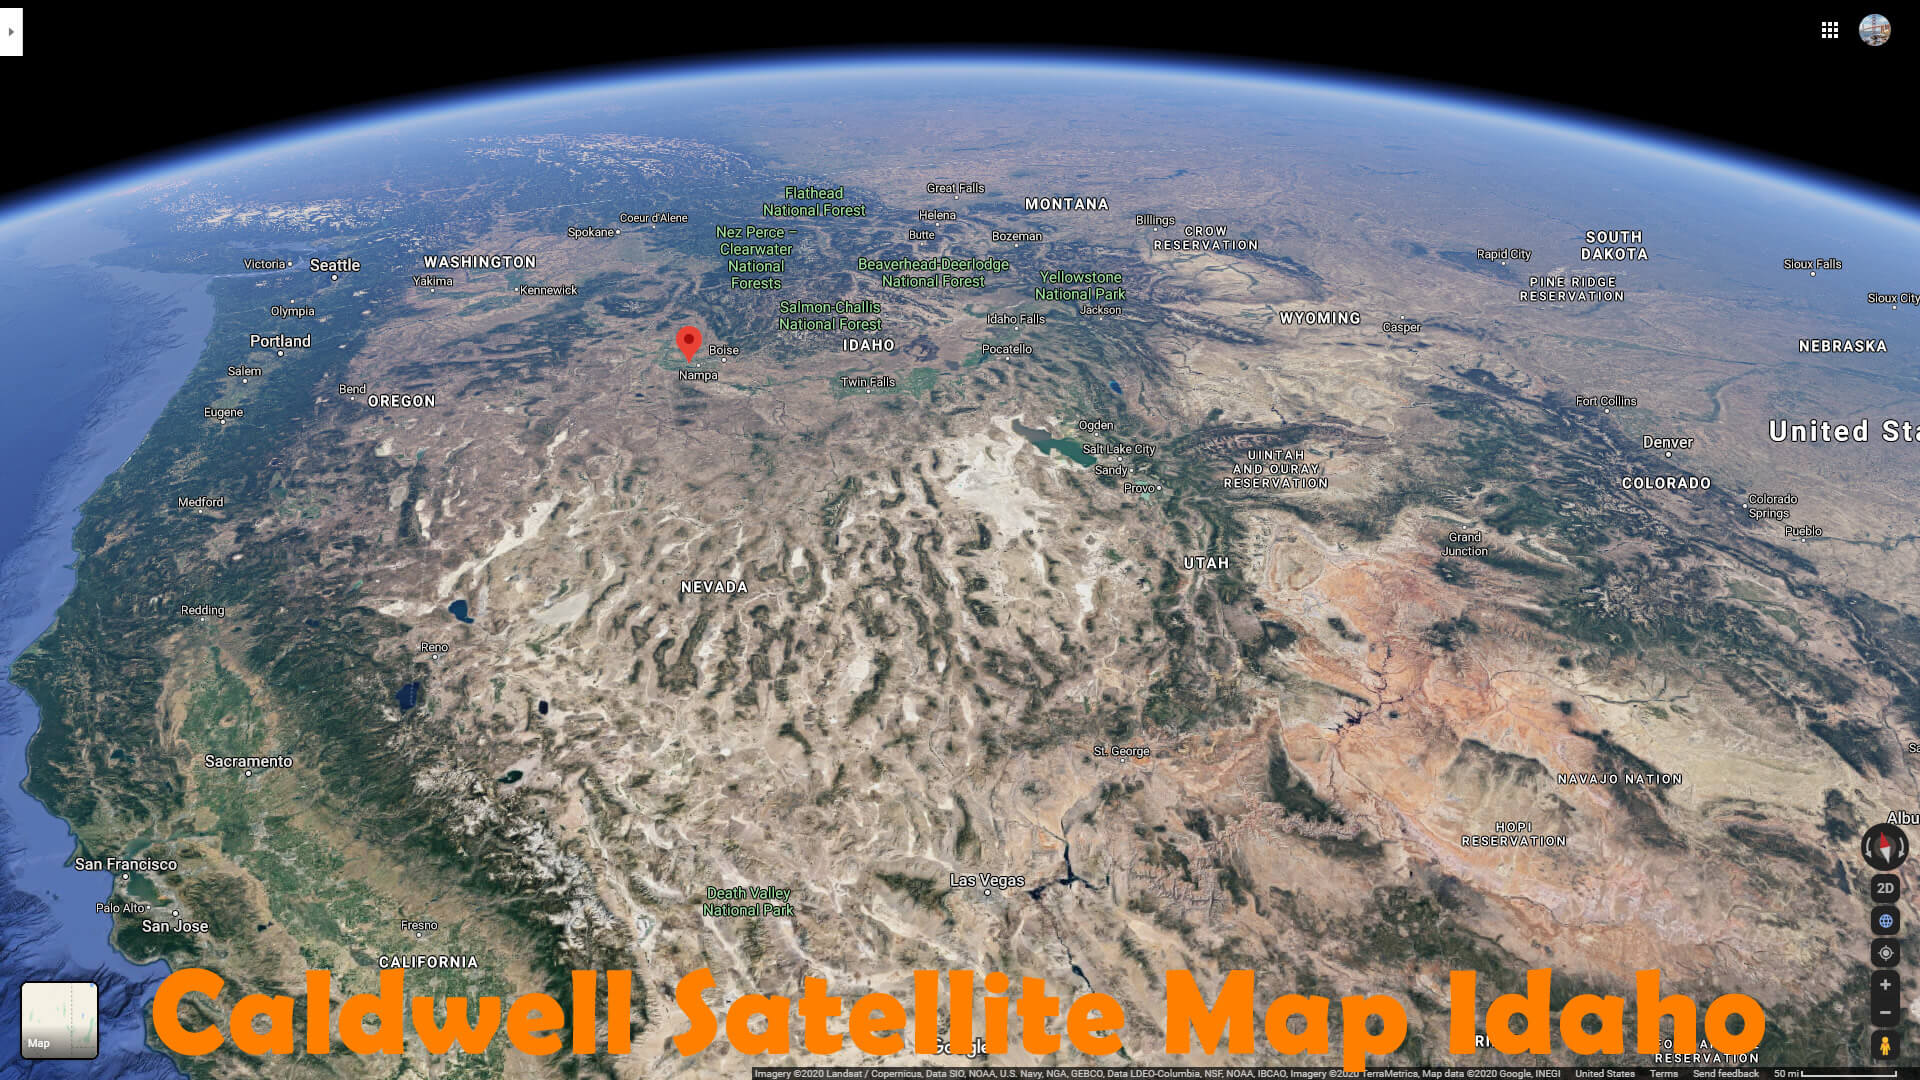 Caldwell Satellite Map Idaho